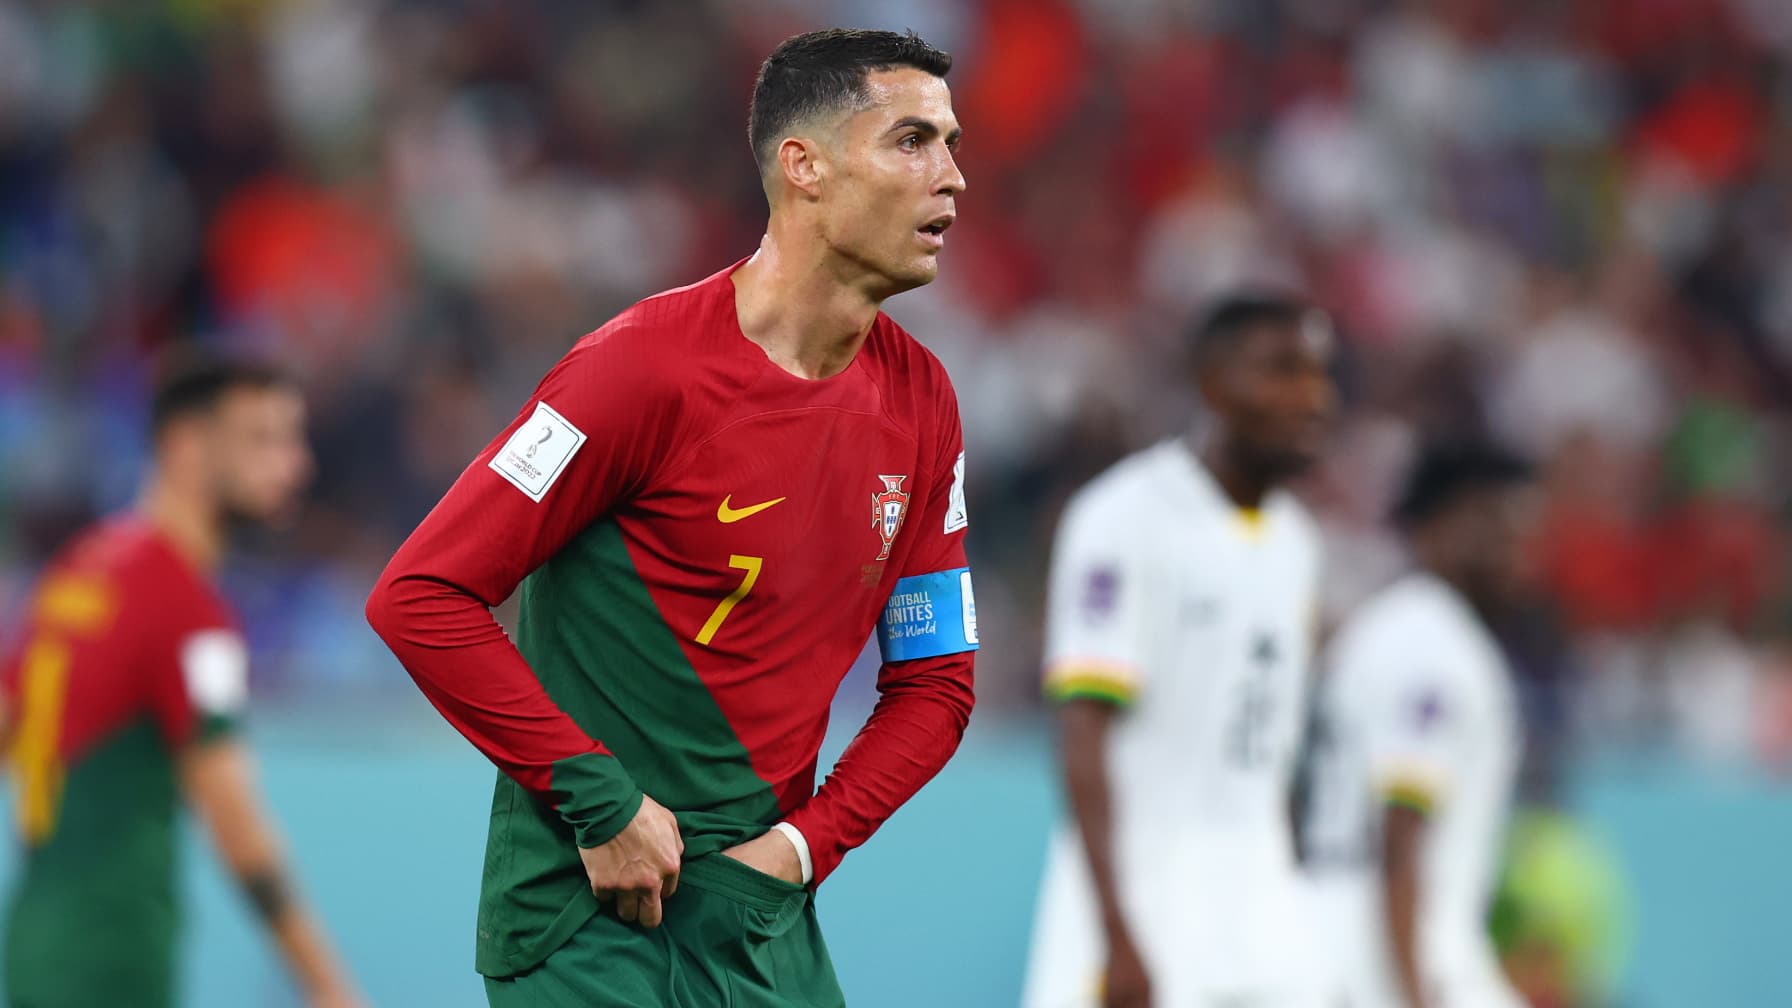 Mondial 2022: Un geste insolite de Cristiano Ronaldo fait polémique